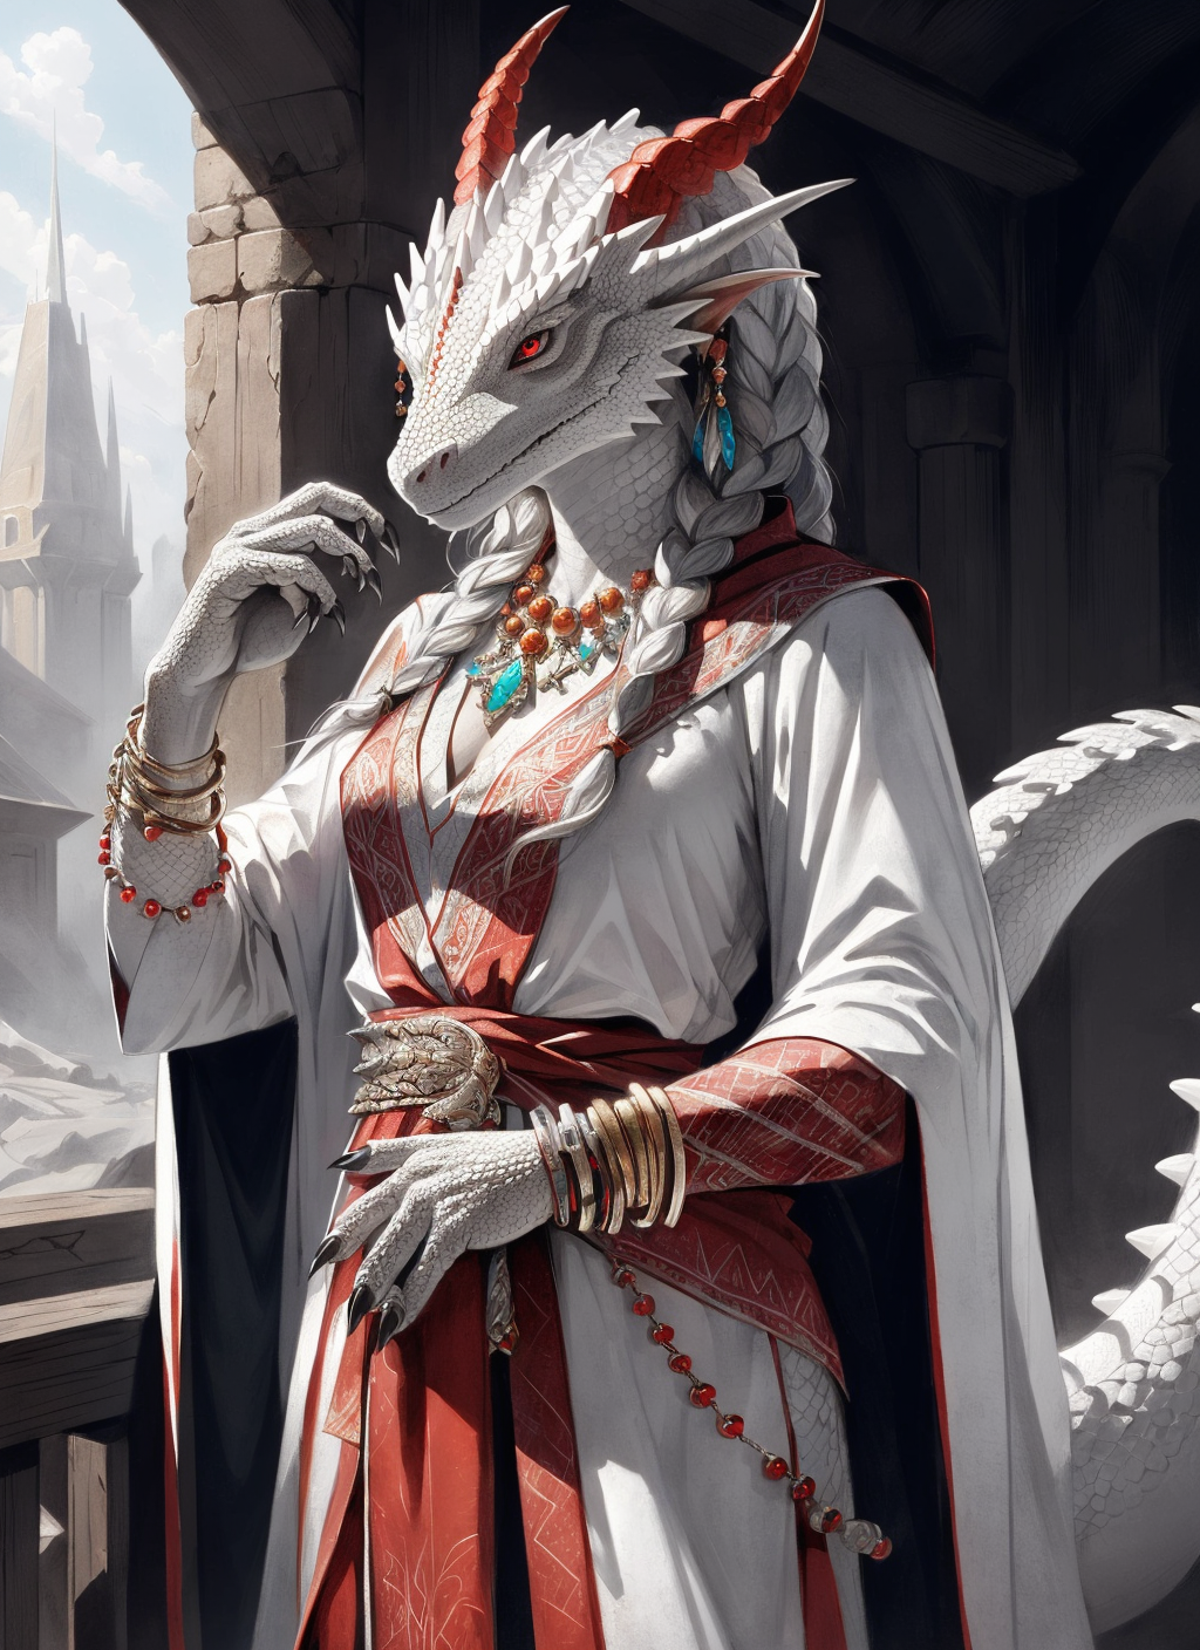 Dragonborn Concept LoRA image by Lykon